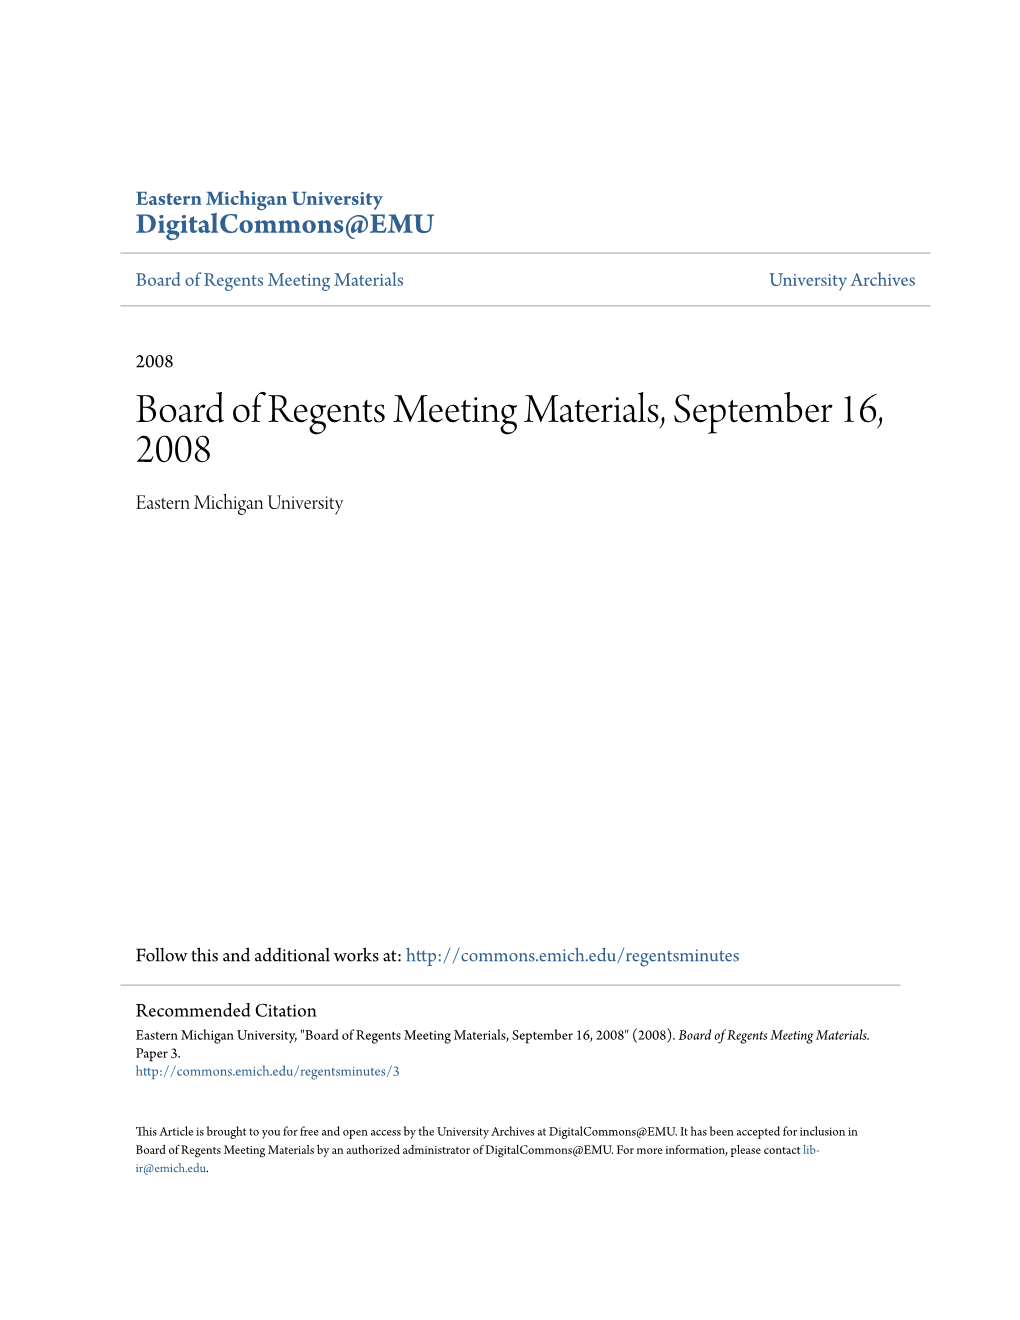 Board of Regents Meeting Materials, September 16, 2008 Eastern Michigan University